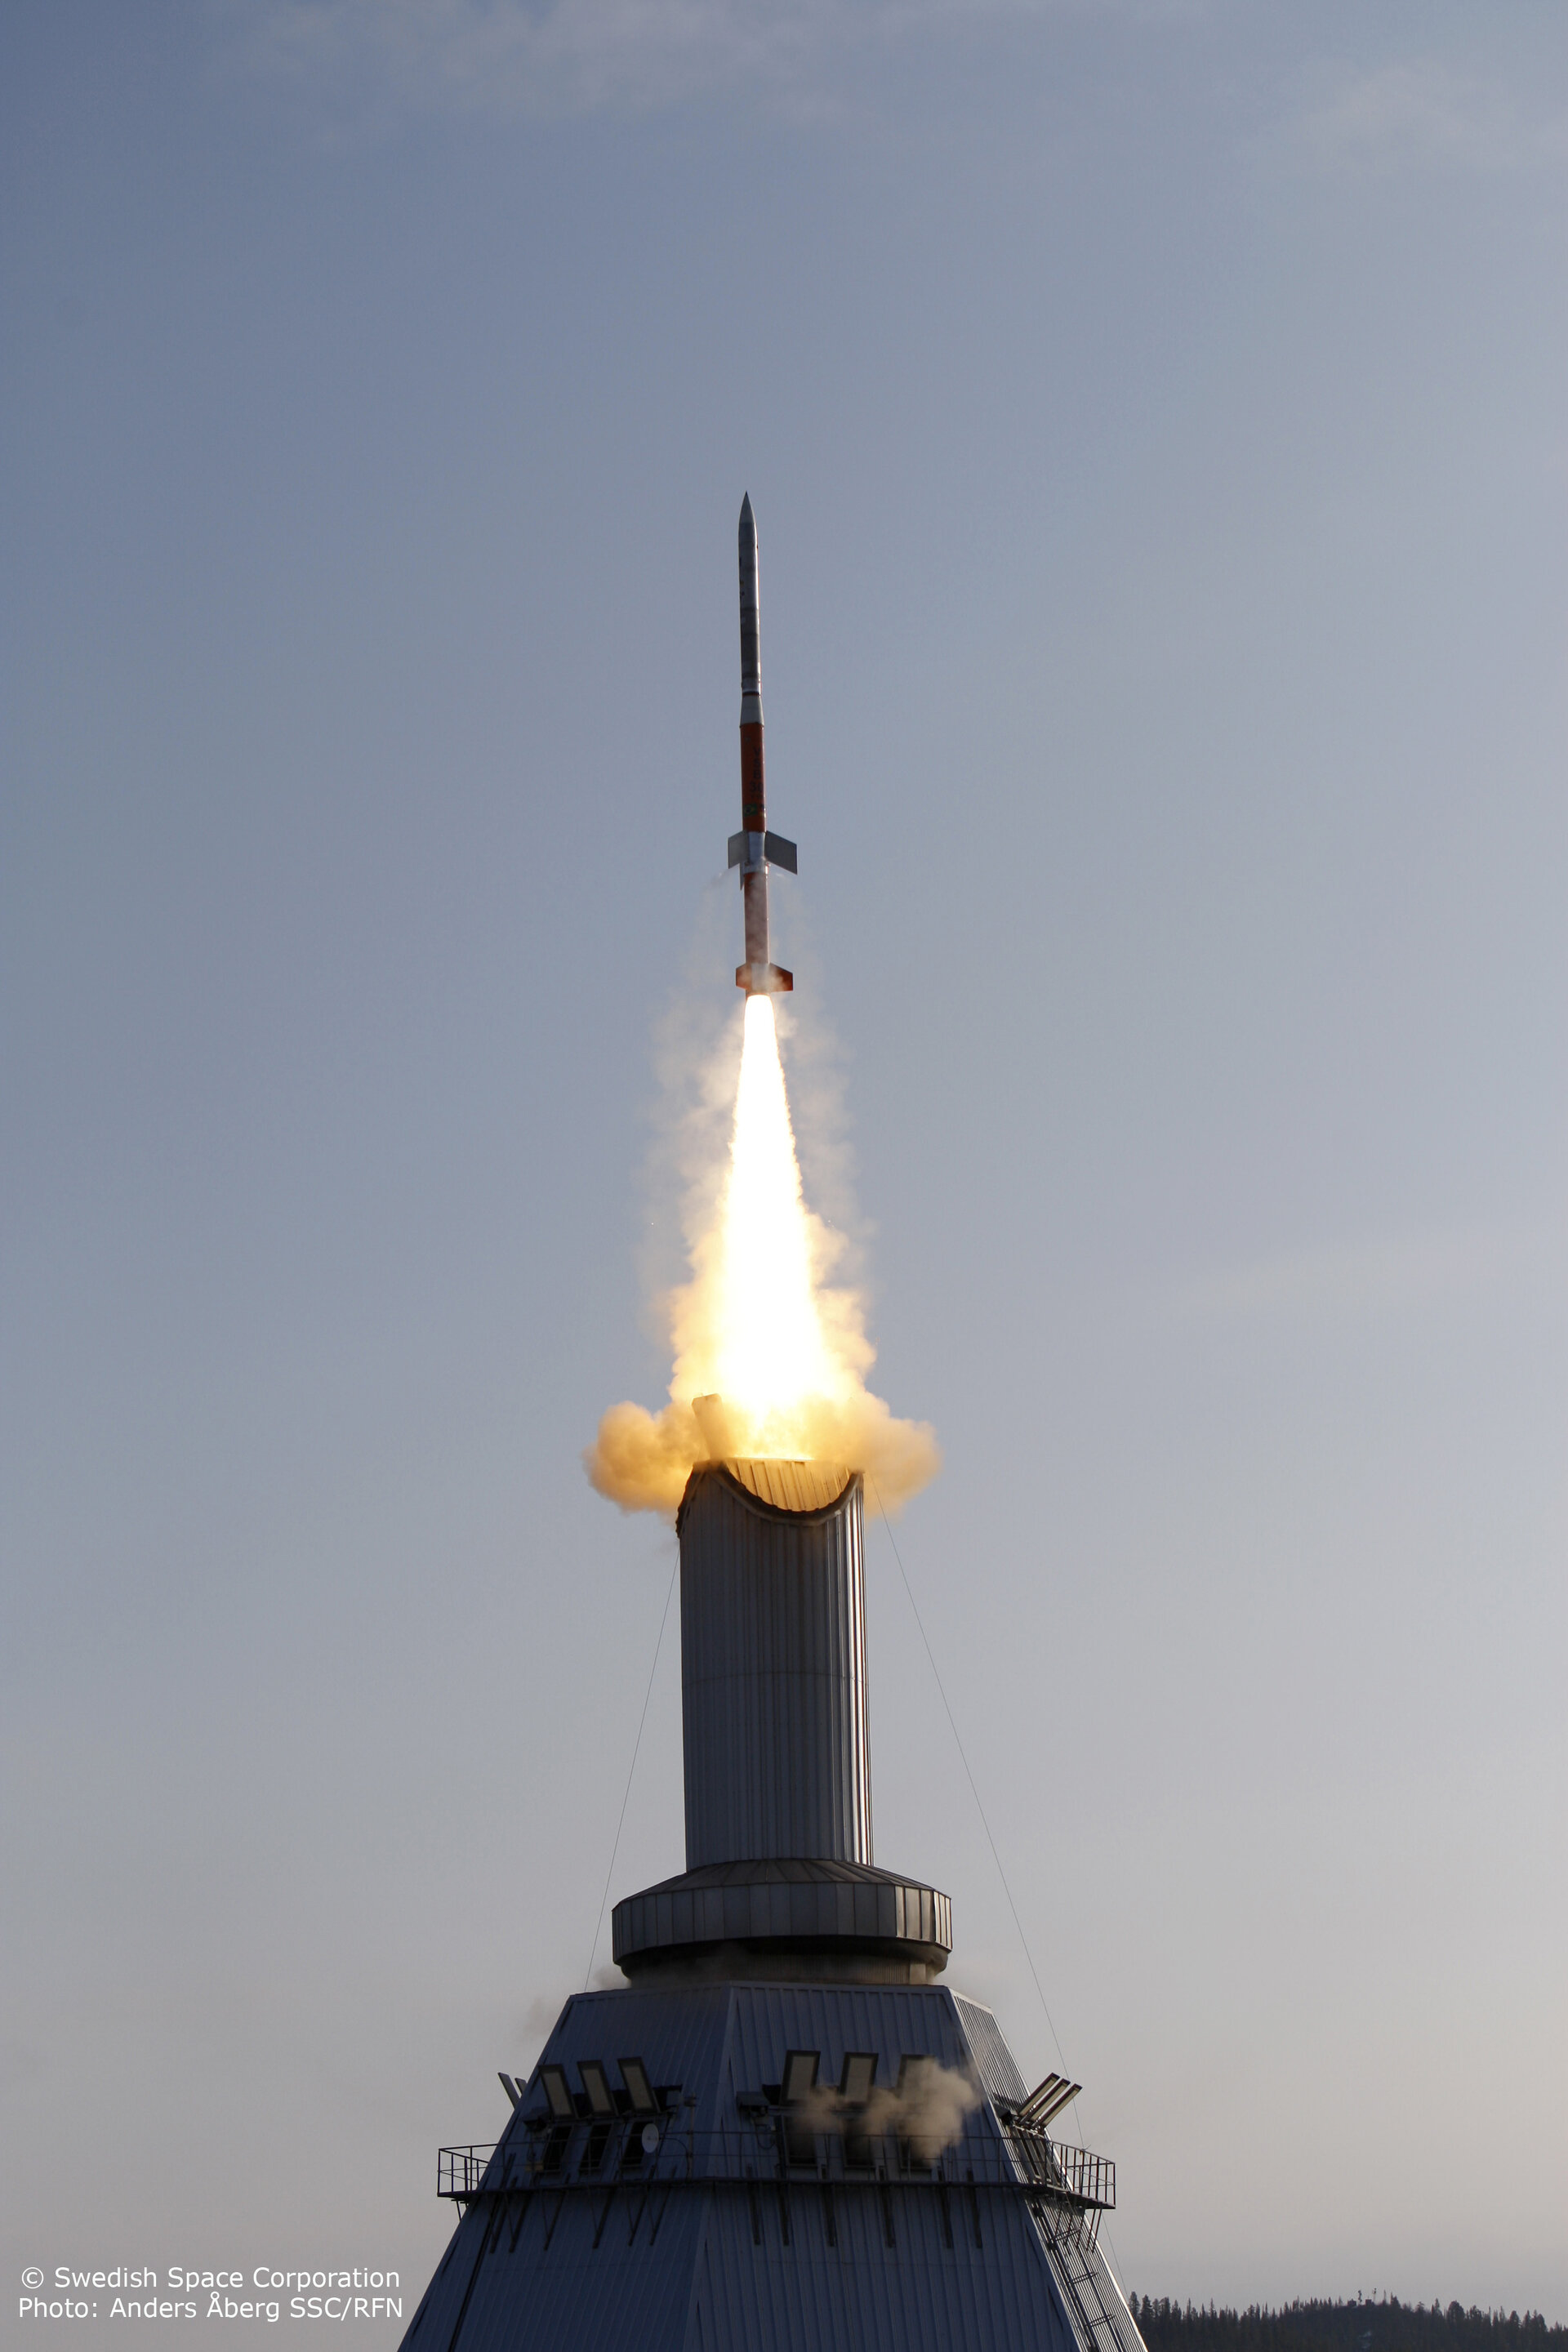 MASER 11 sounding rocket launches from Esrange